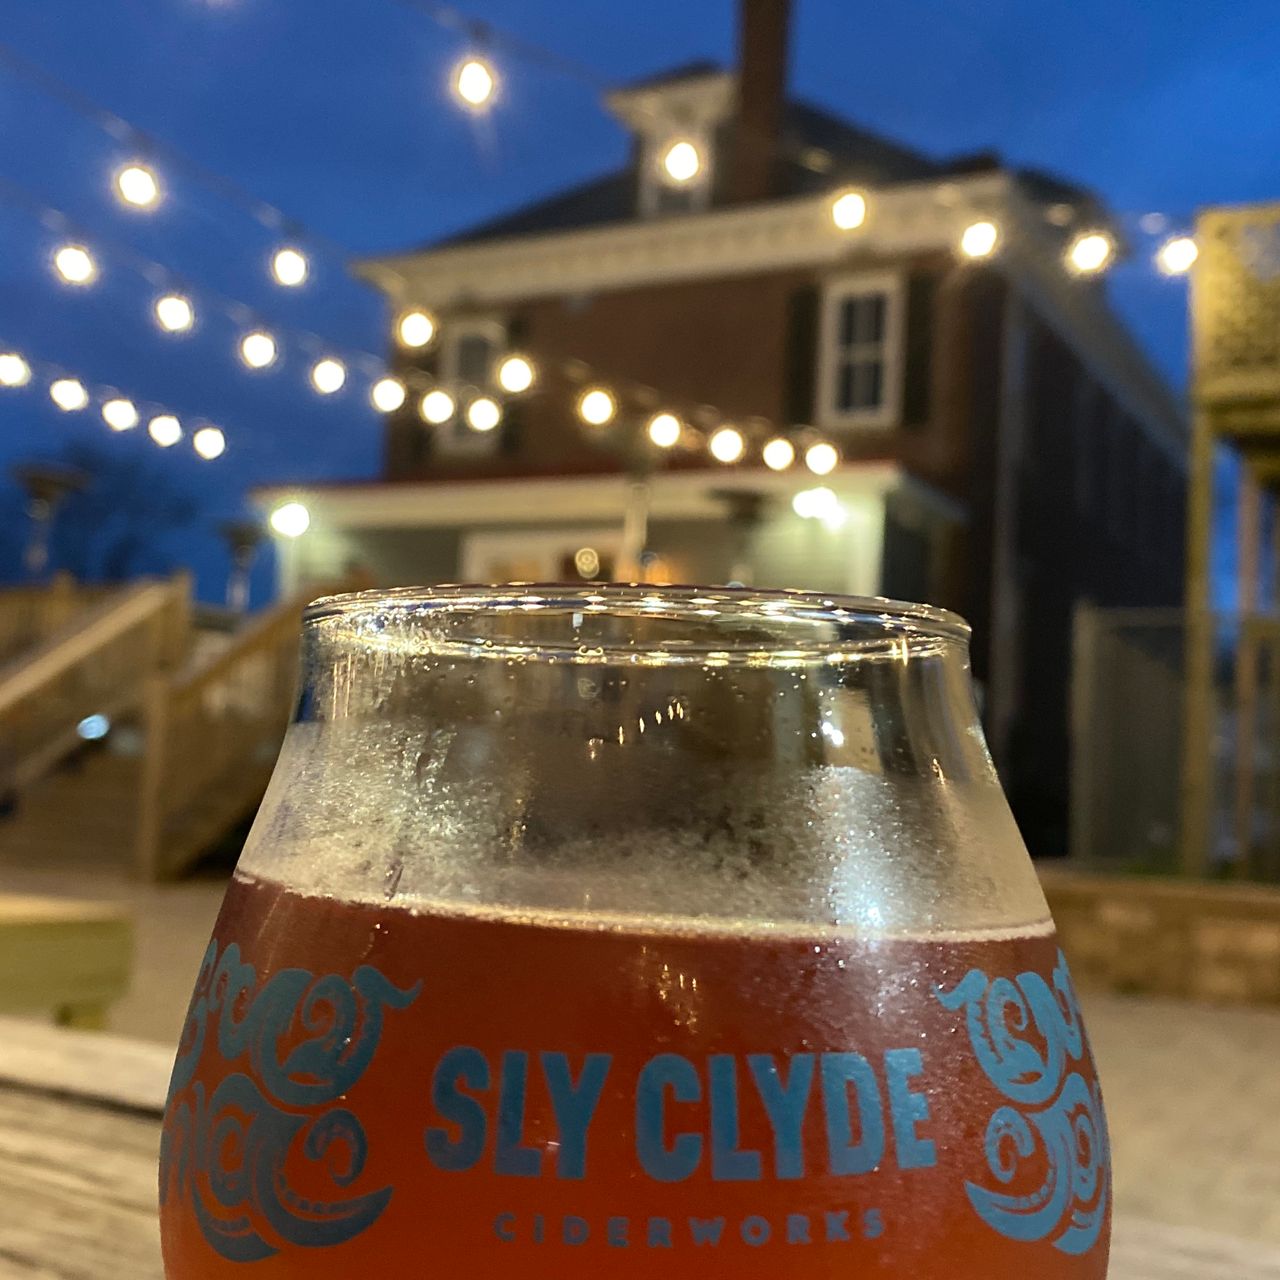 Sly Clyde Ciderworks Restaurant